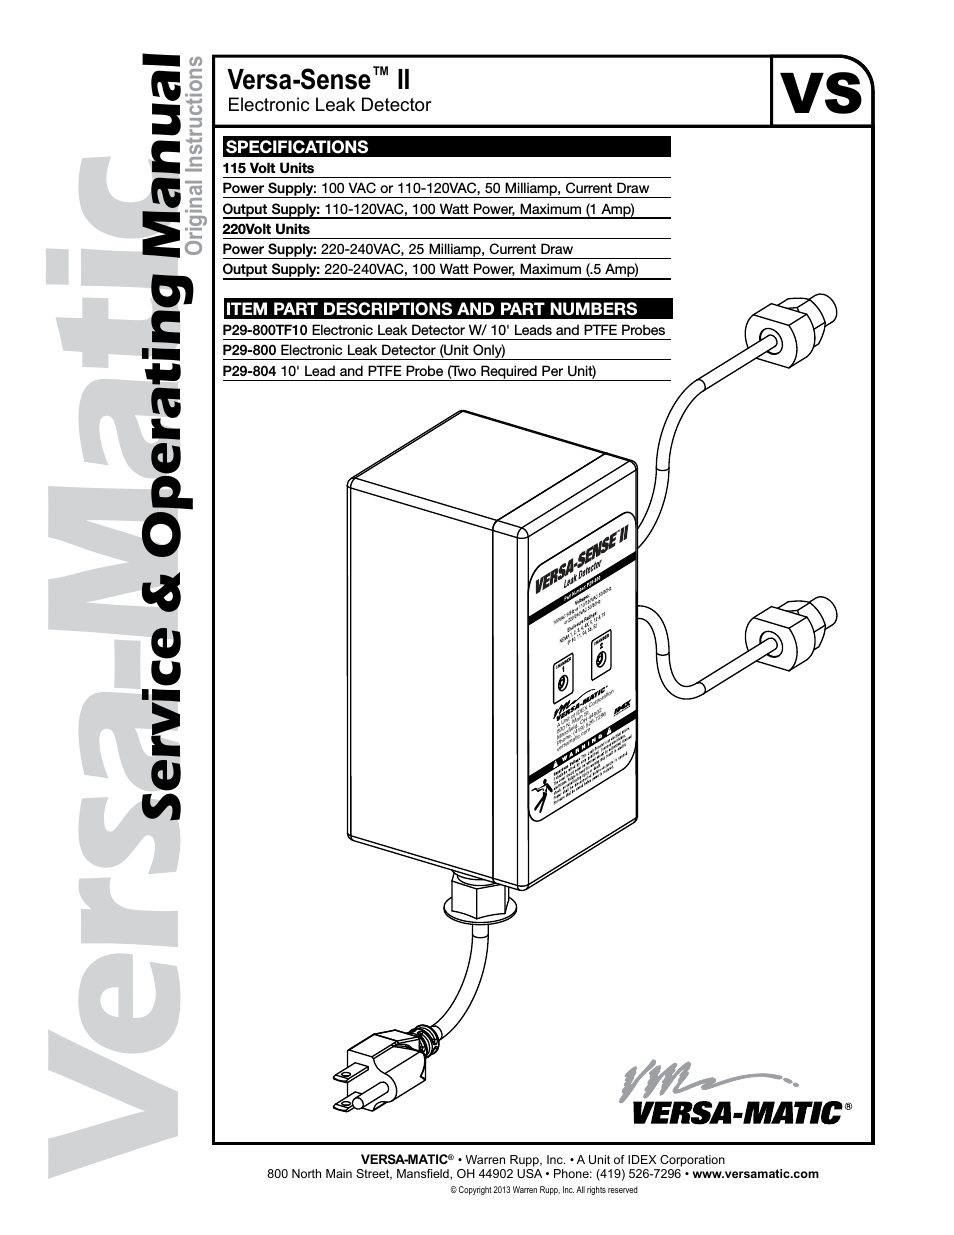 Versa-Sense II Electronic Leak Detector